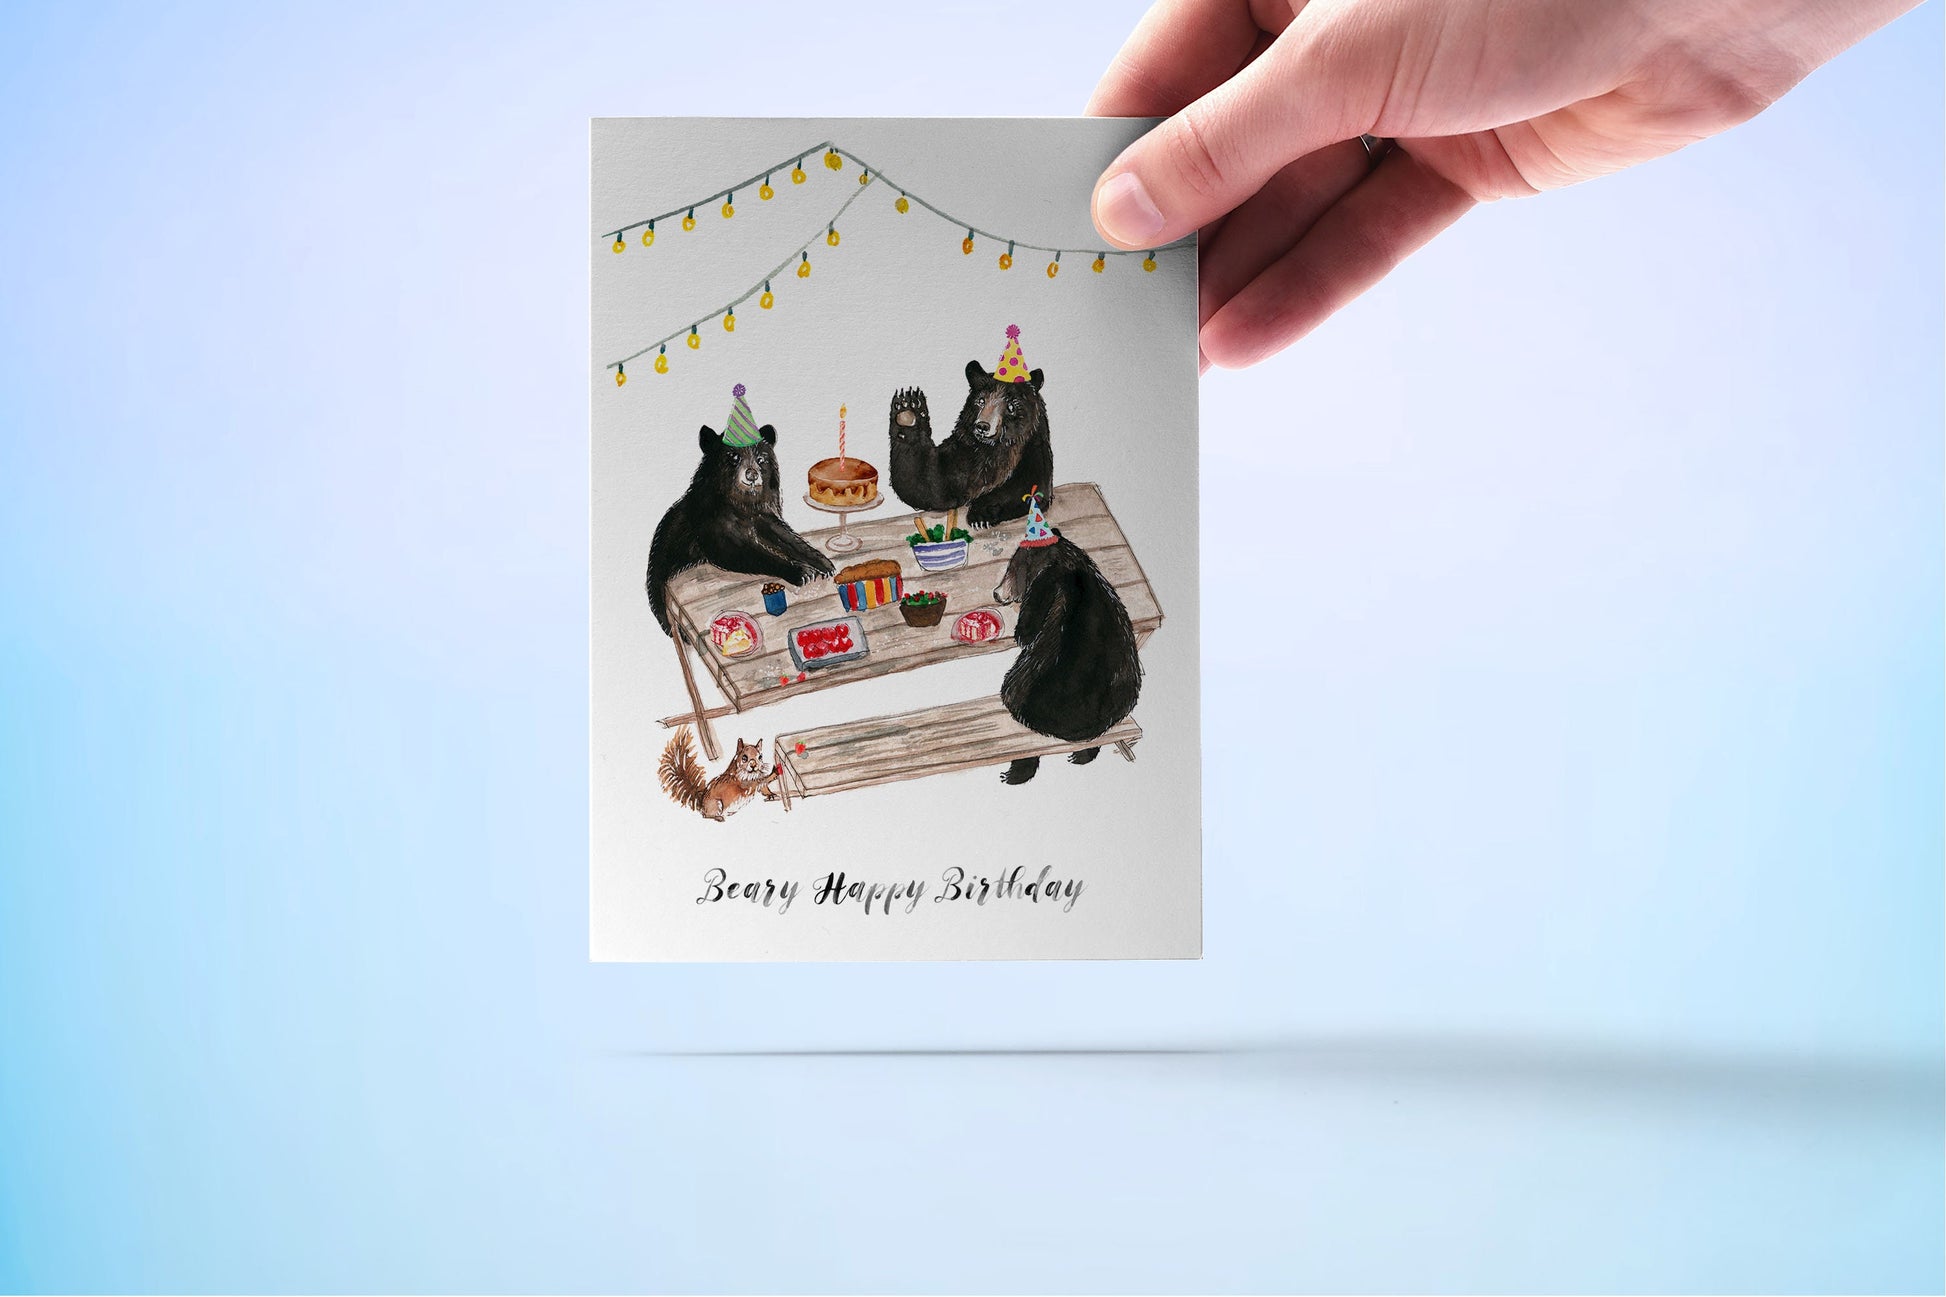 Black Bear Birthday Cards For Her - Picnic Kids Birthday Party Card - Whimsical Woodland Animals Birthday Card Funny - Liyana Studio